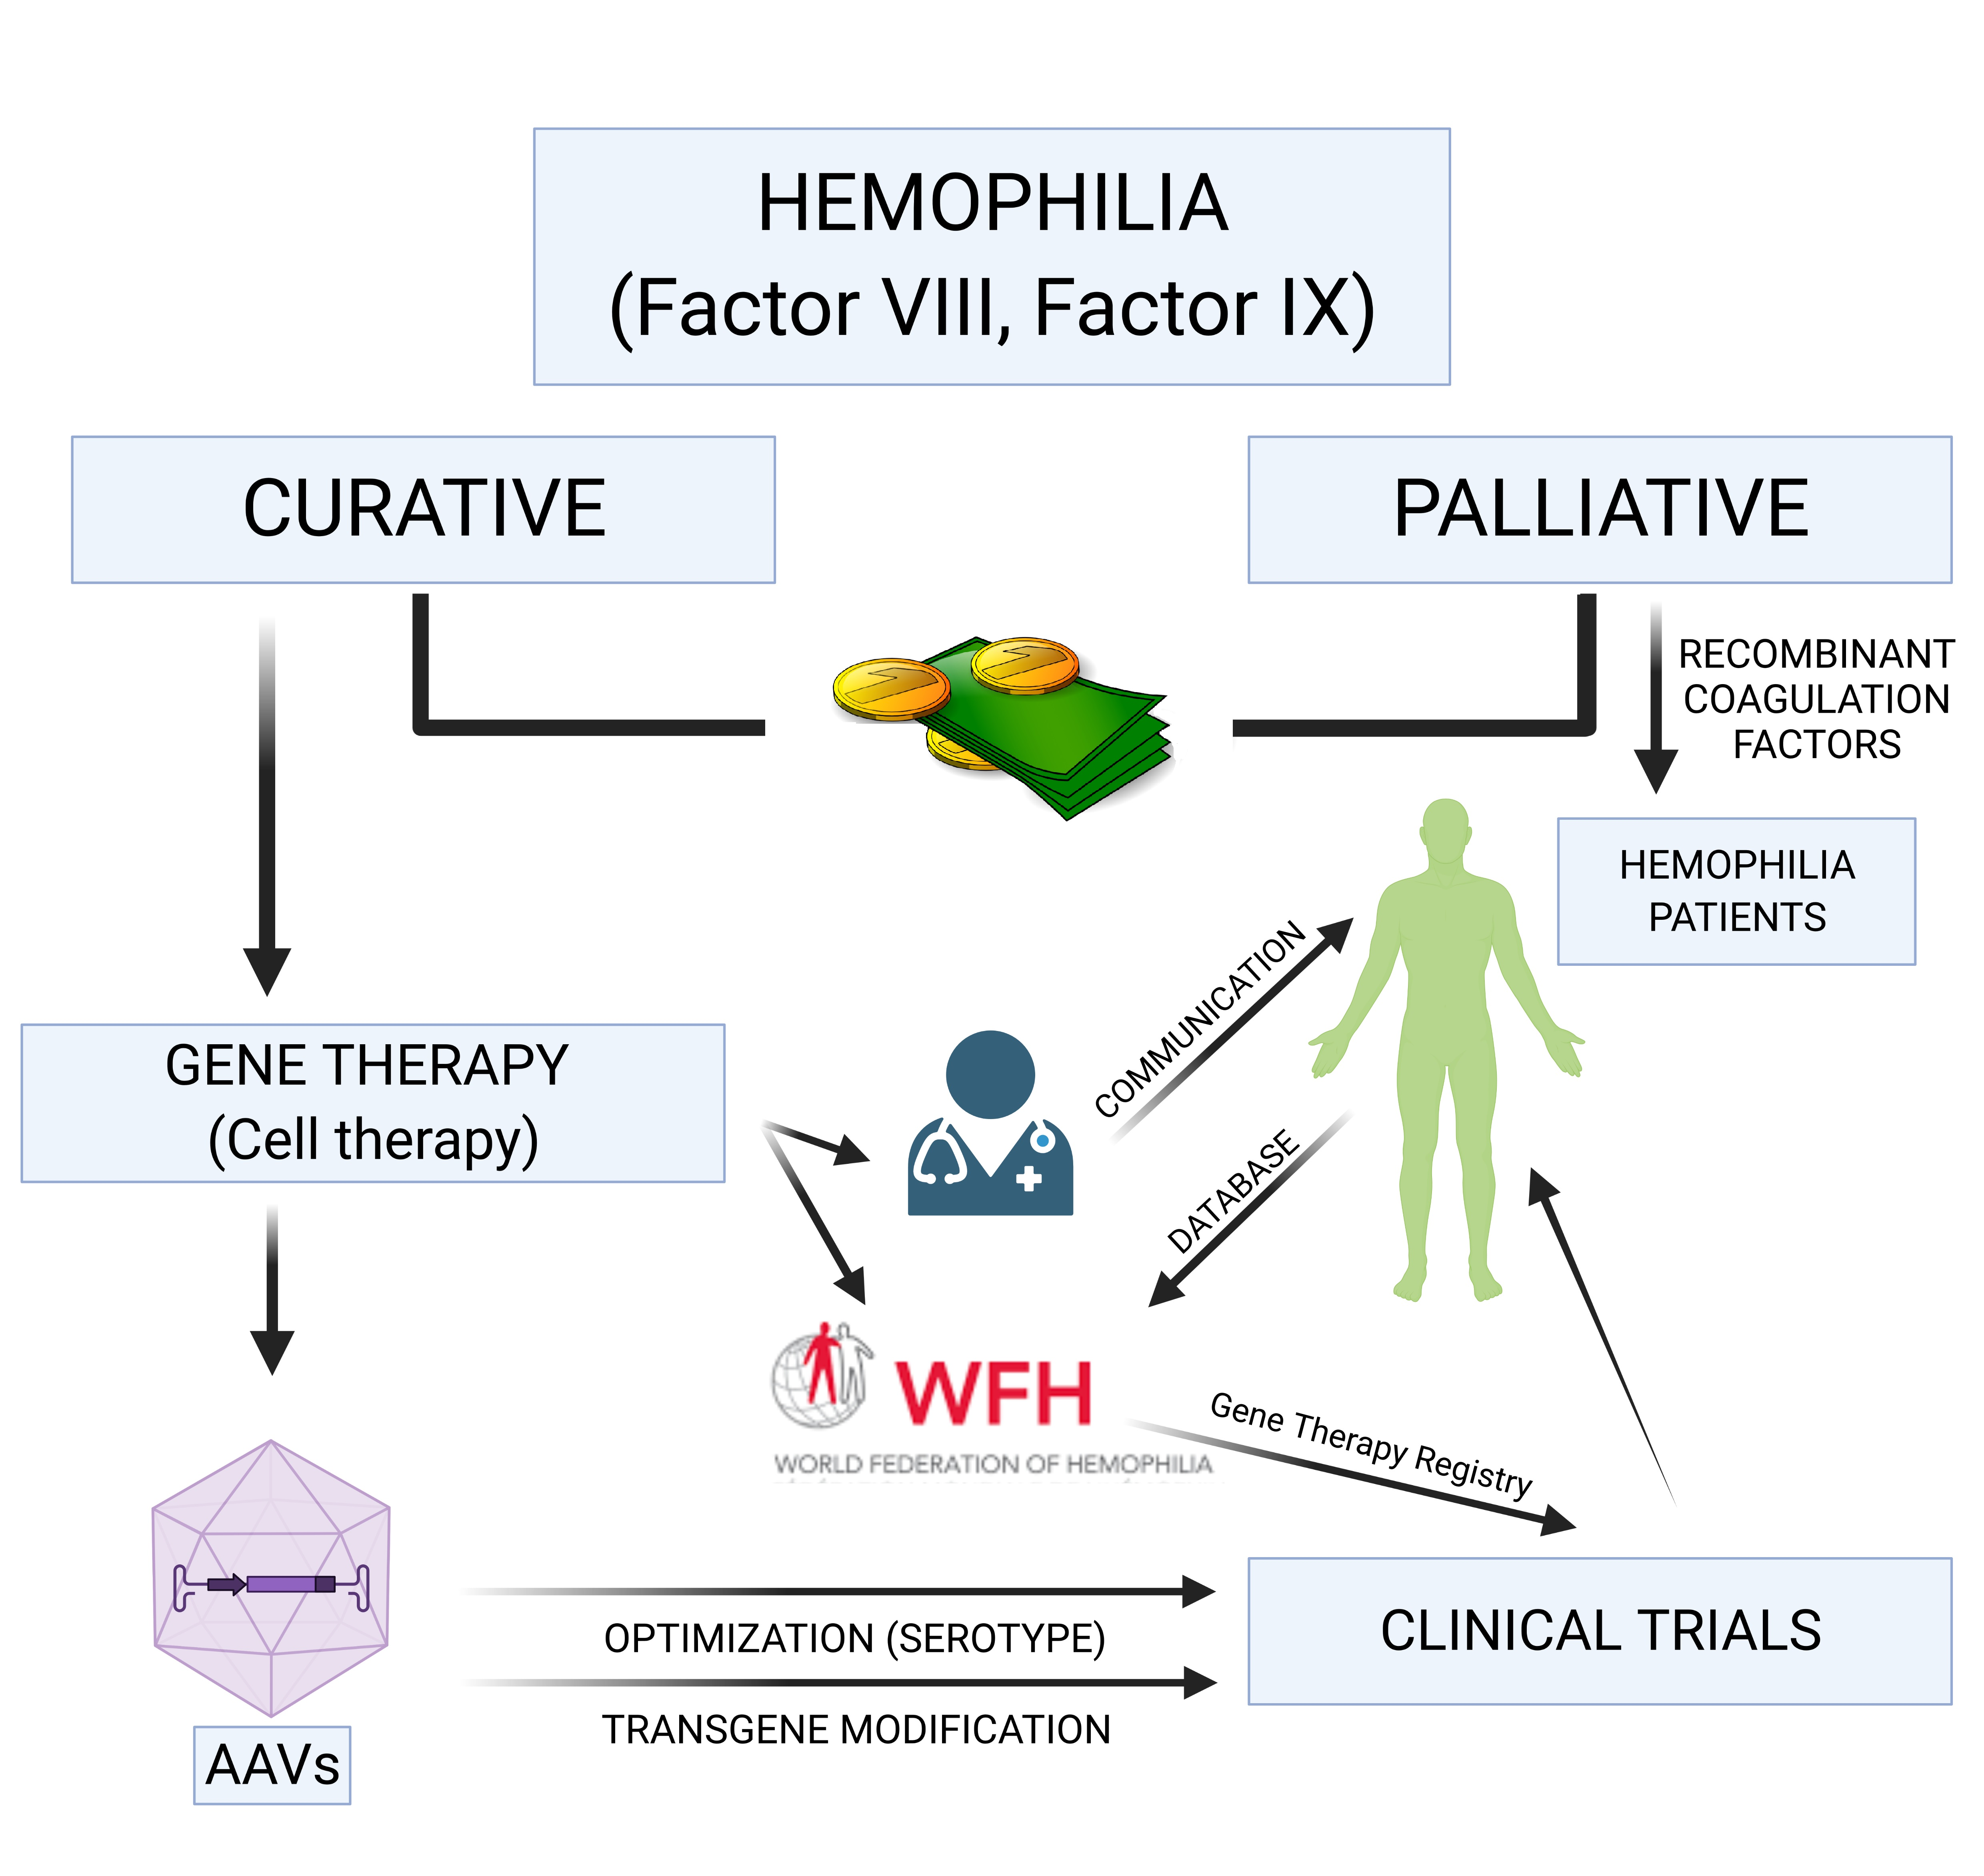 Antithrombin-lowering in hemophilia: a closer look at fitusiran